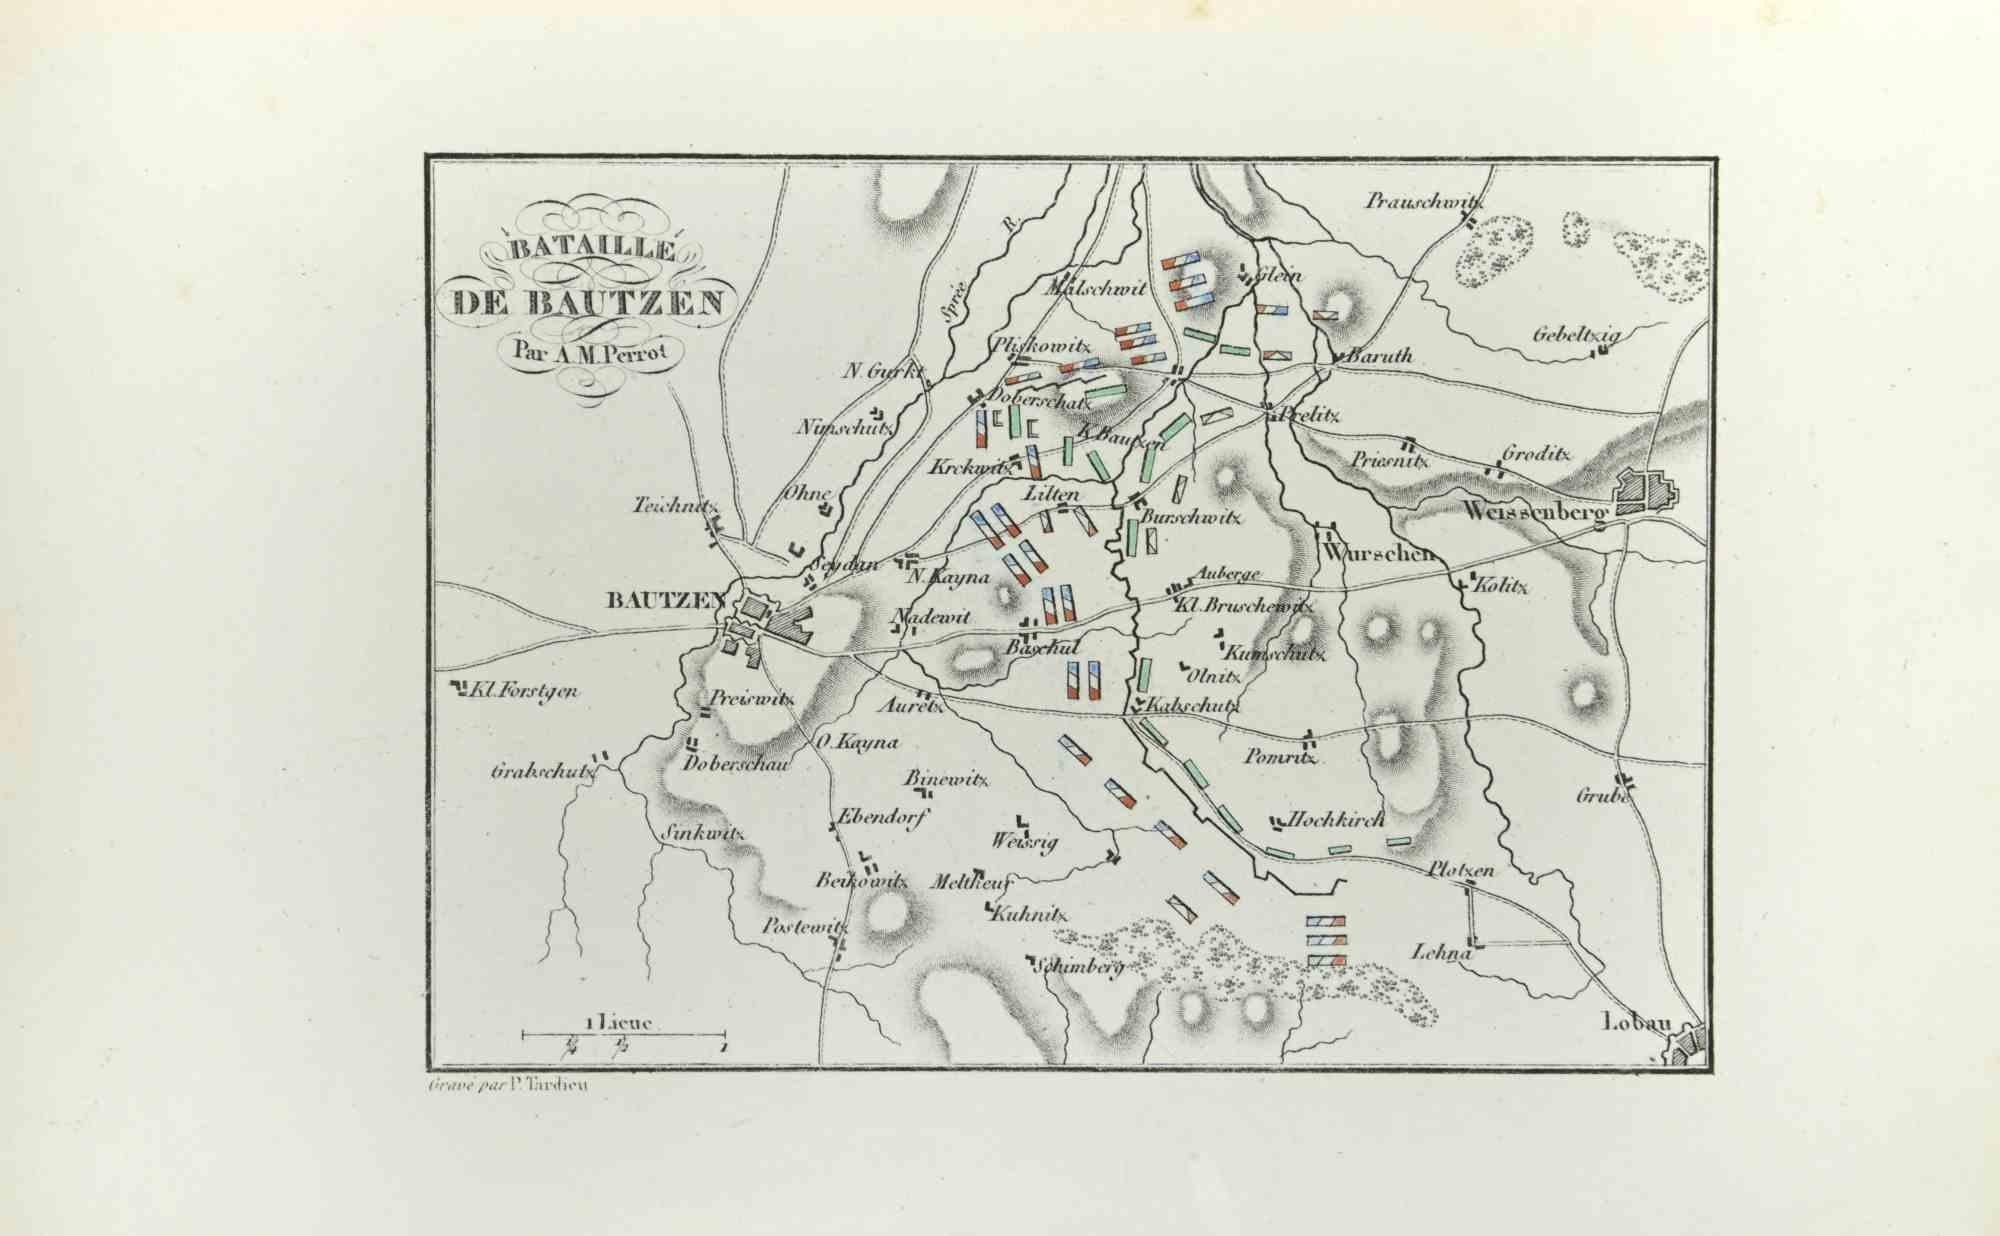 Battle of Bautzen - Etching by Pierre François Tardieu - 1837